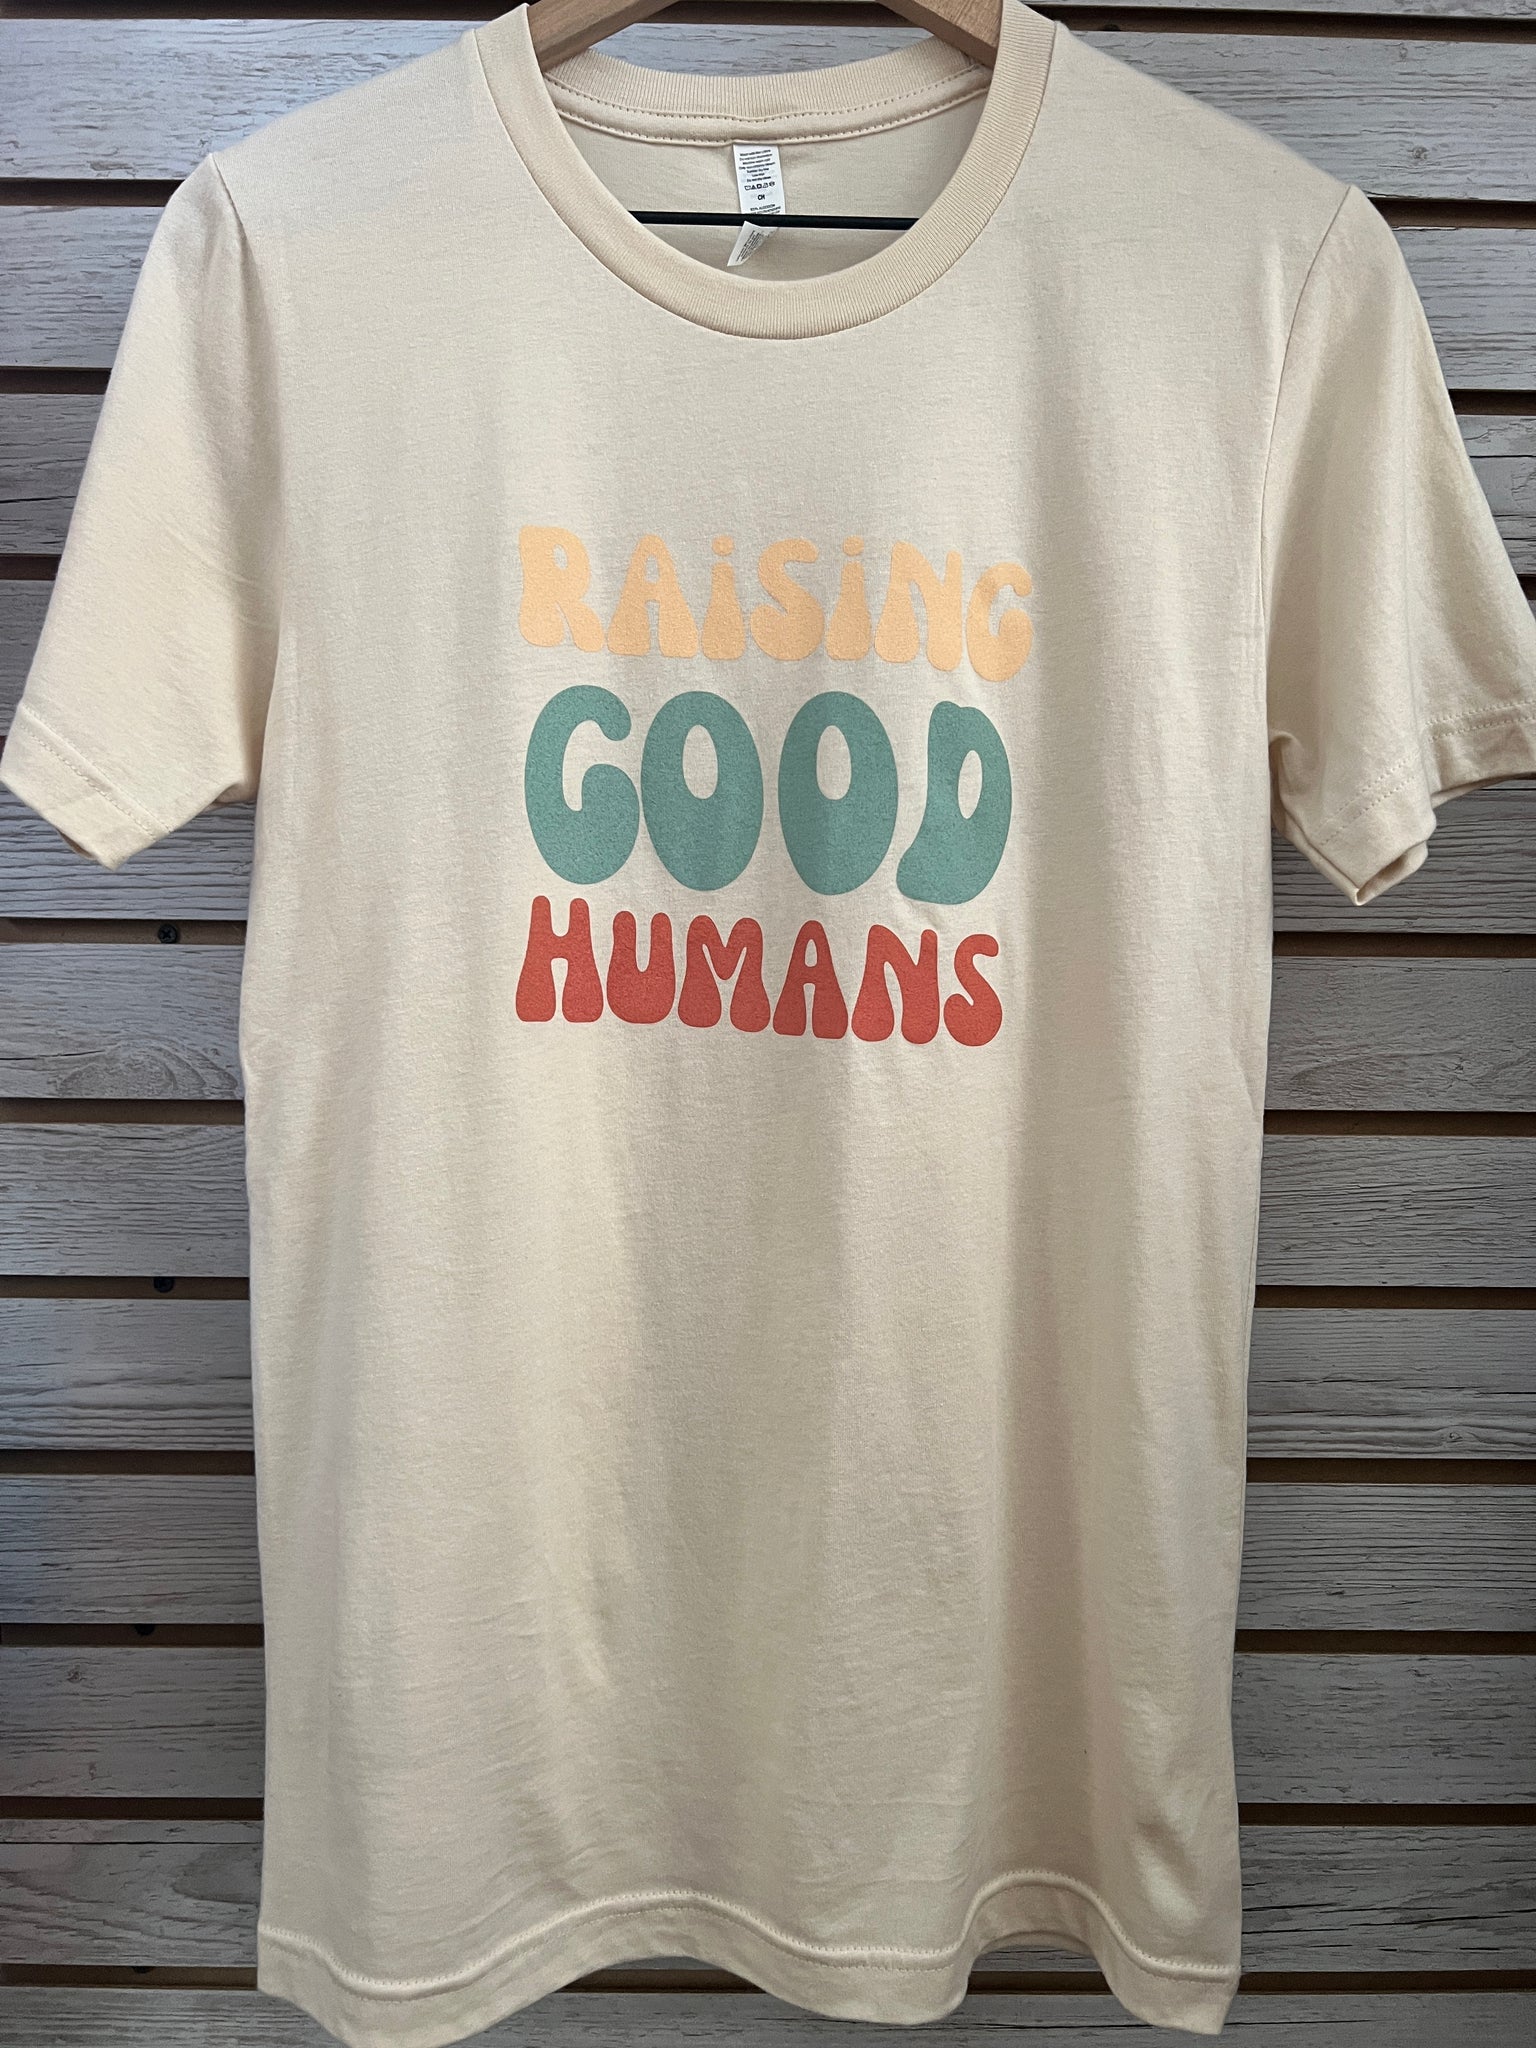 Raising Good Humans